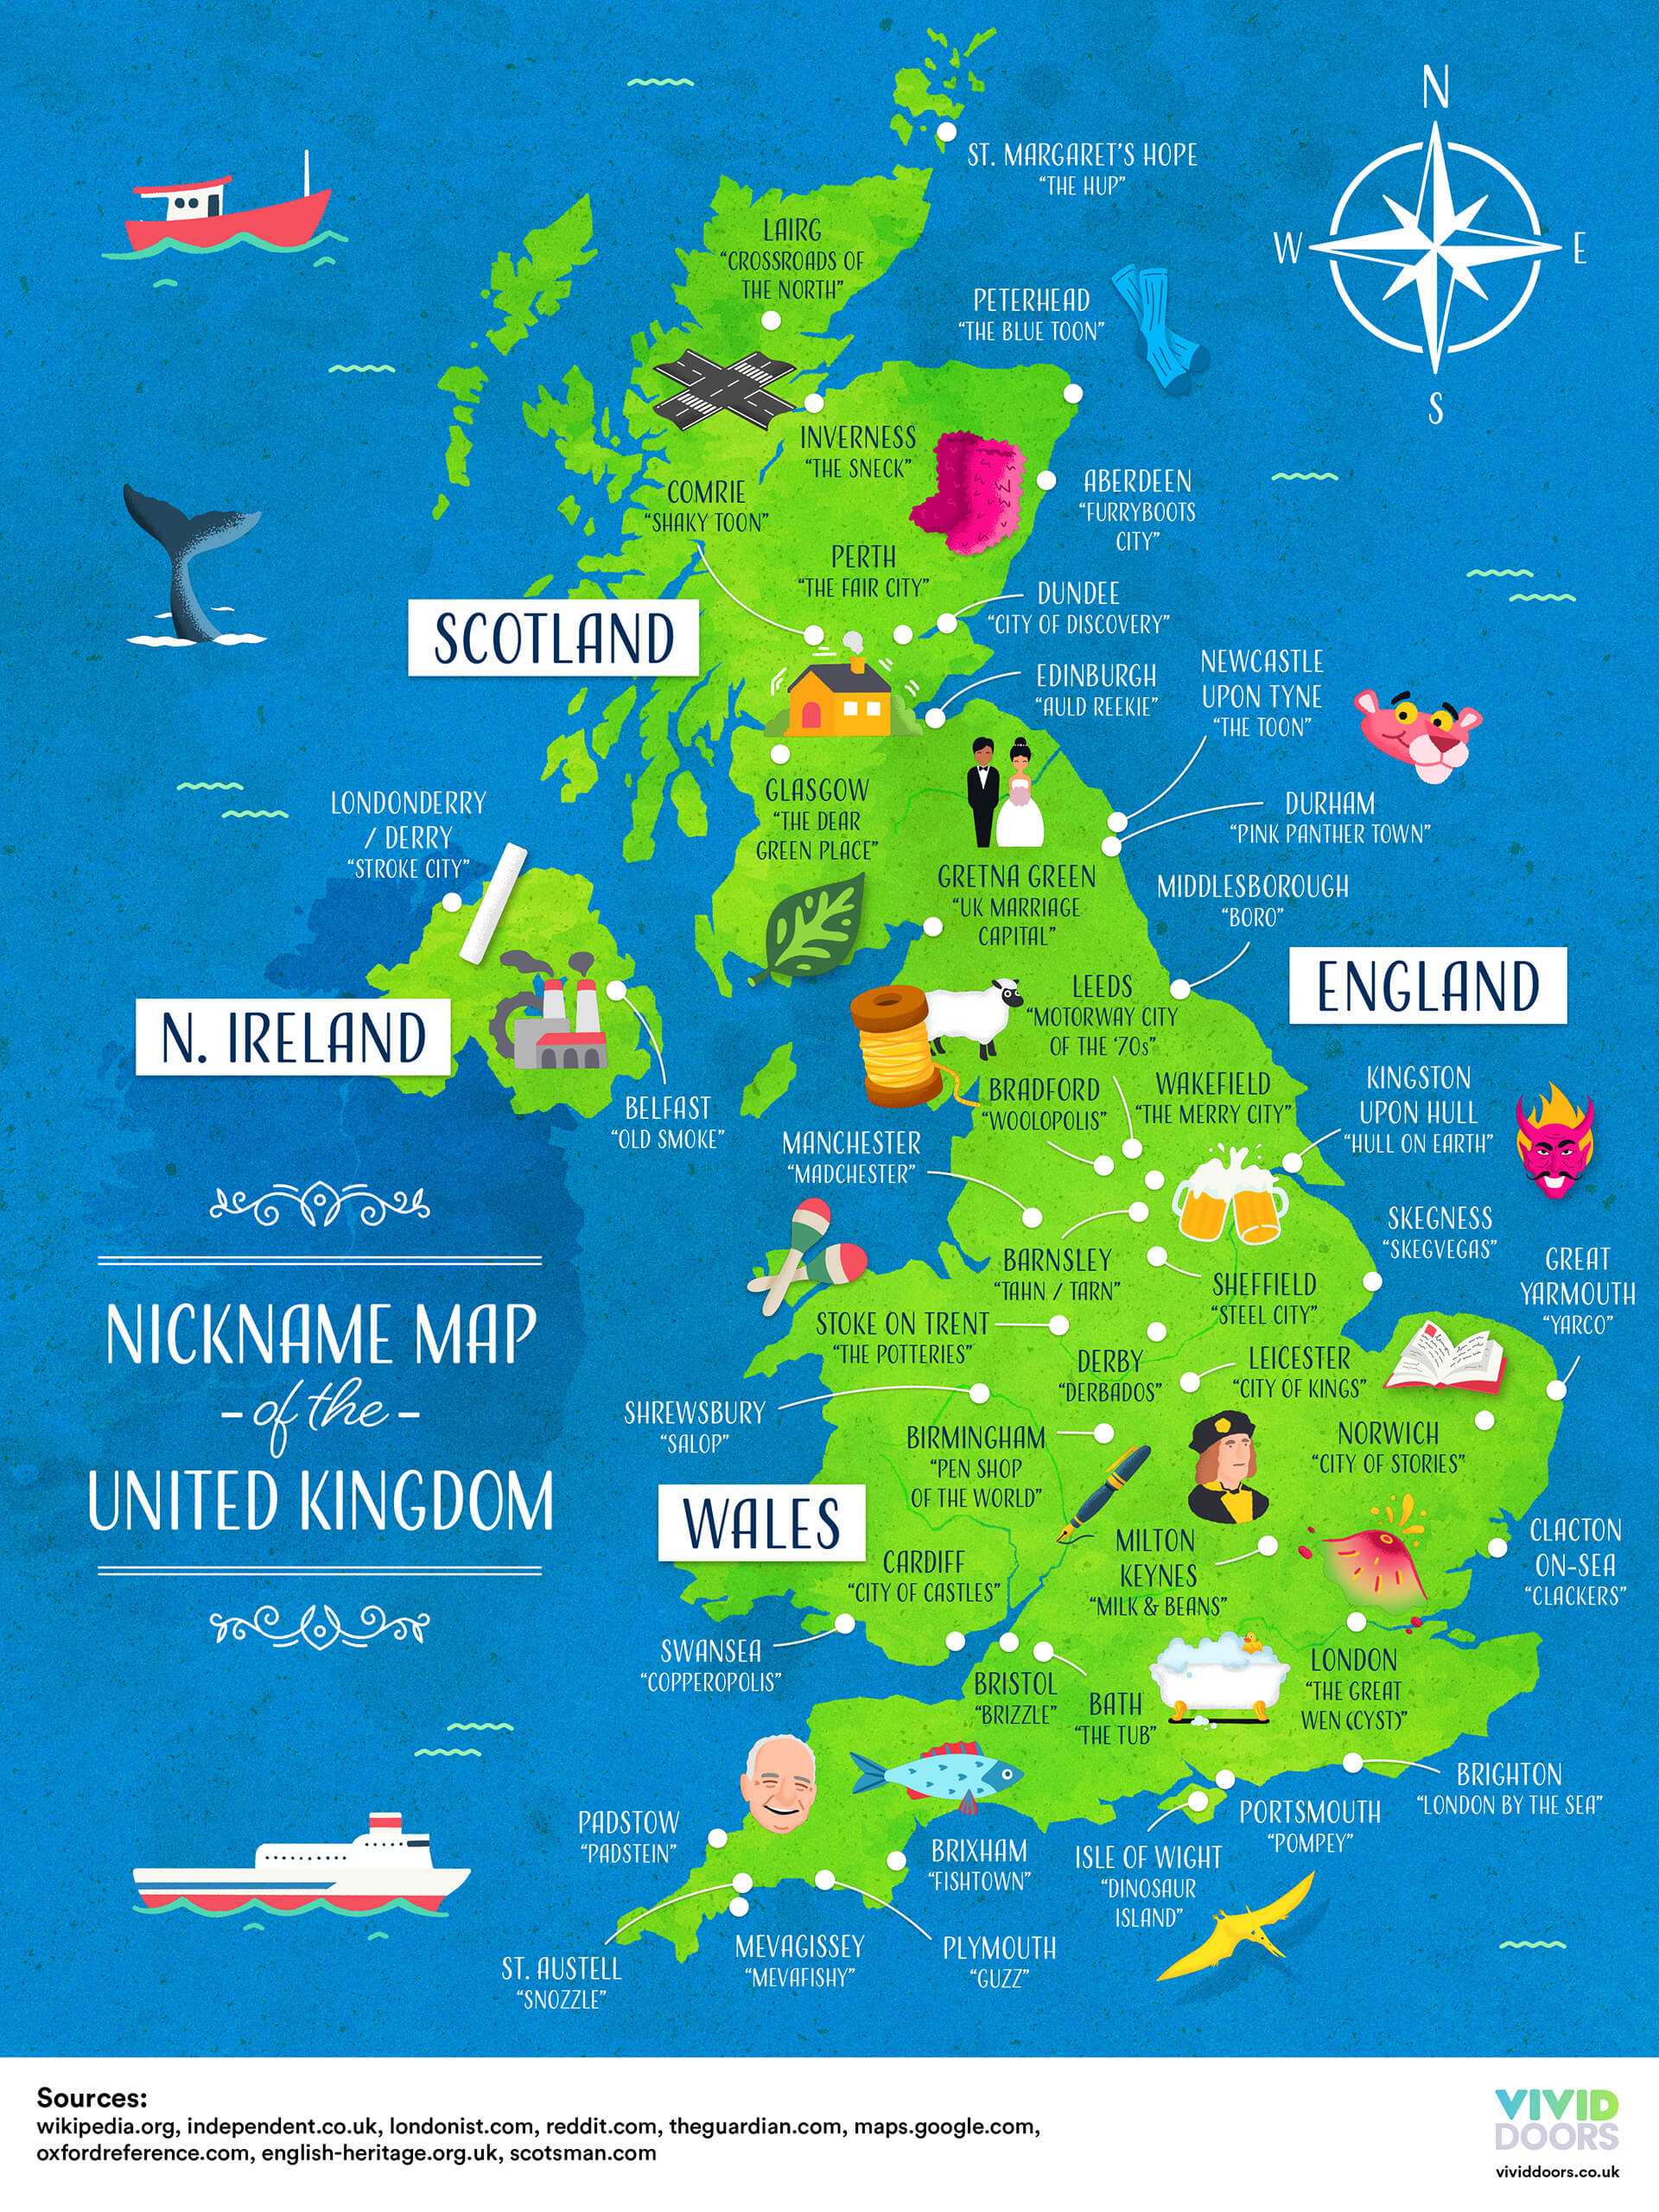 Nickname map of UK